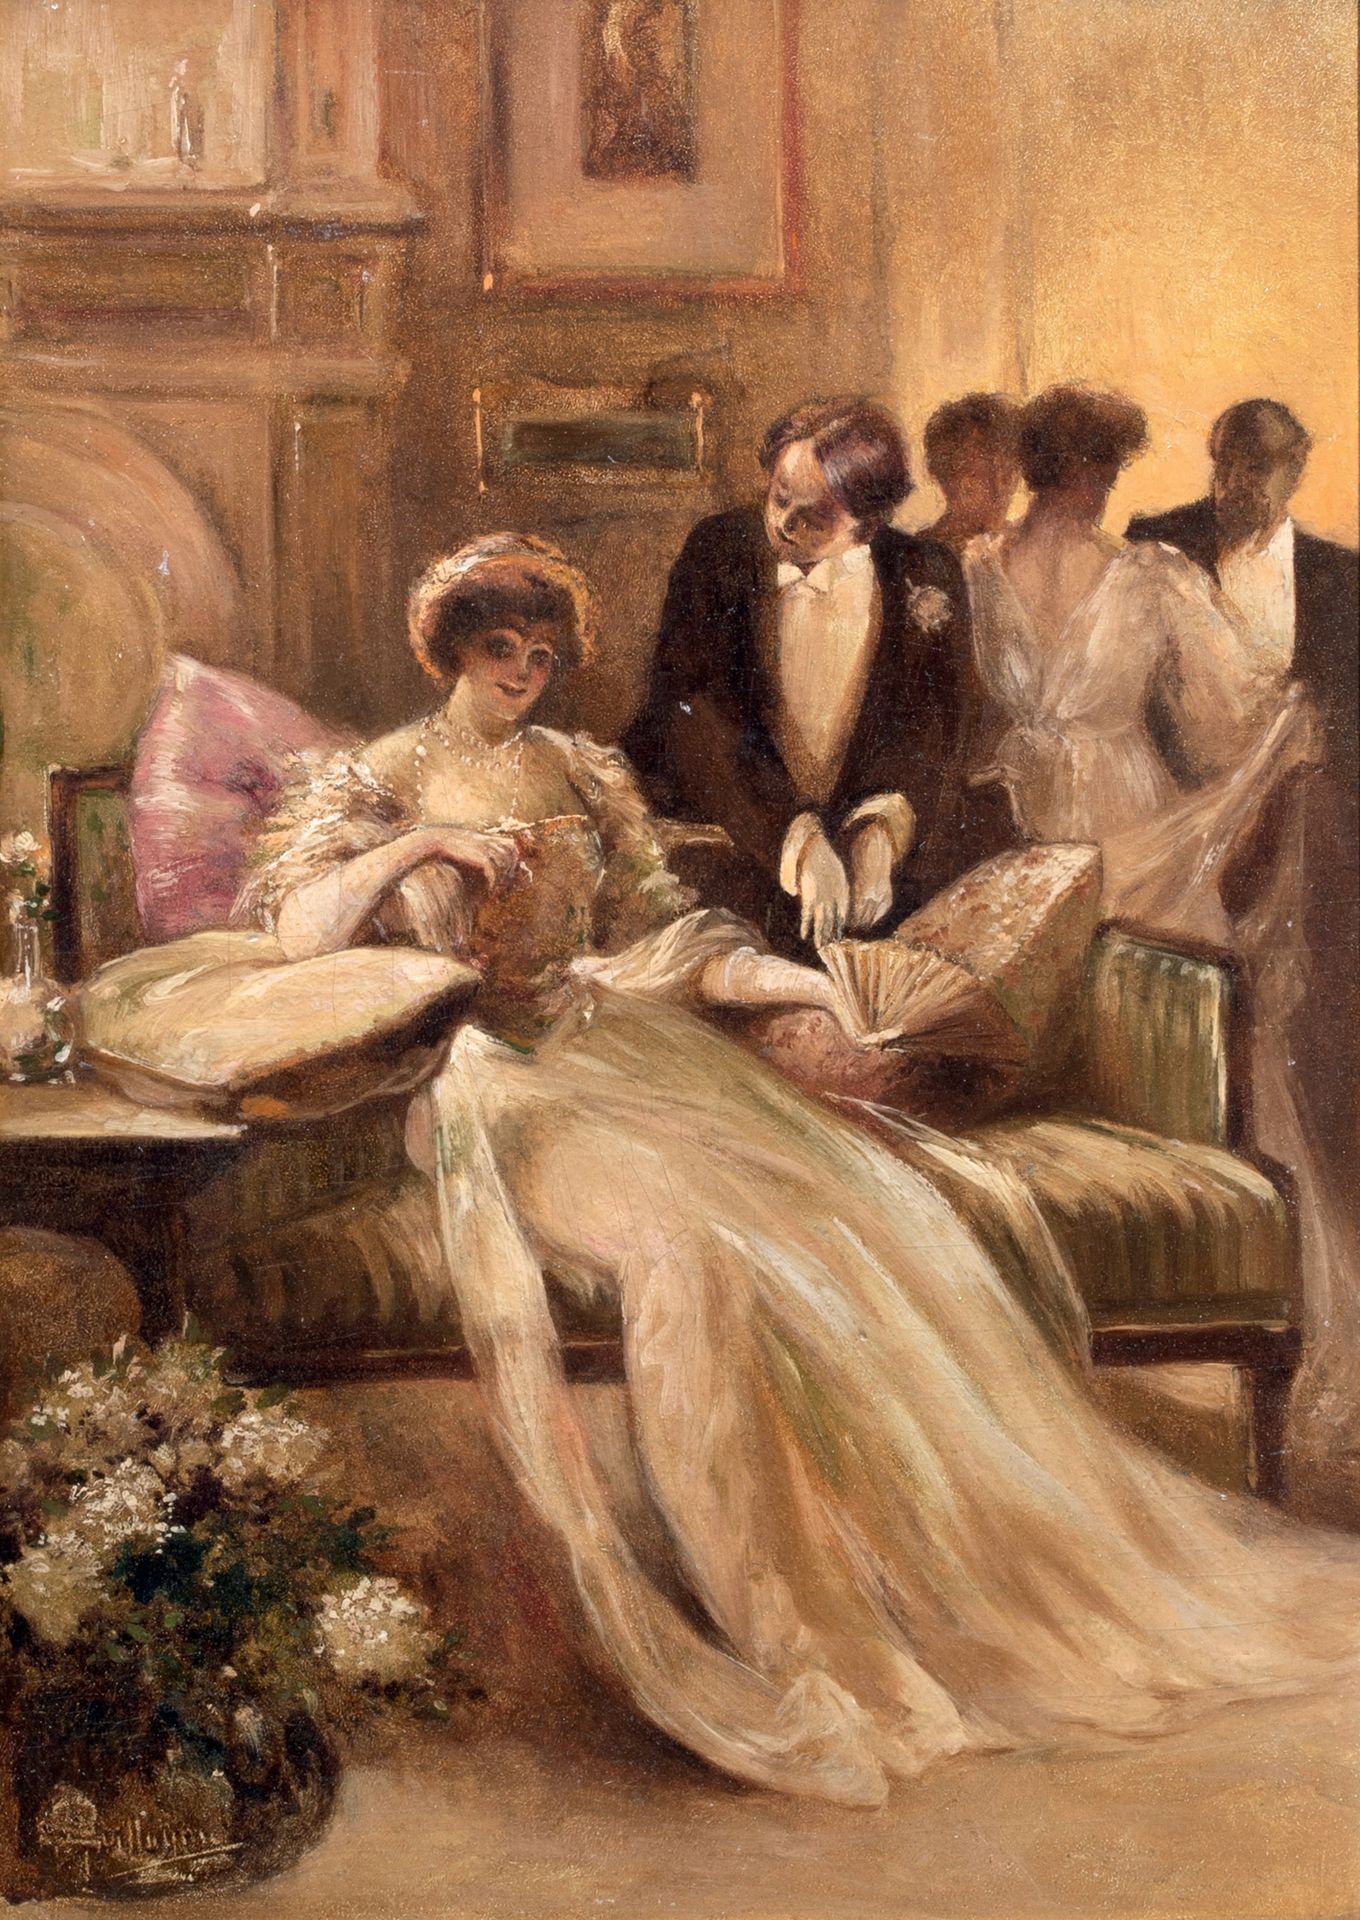 Albert Paul GUILLAUME (1872-1943) 球类场景
板面油画，左下角签名，小幅重绘 35.5 x 24.8 cm